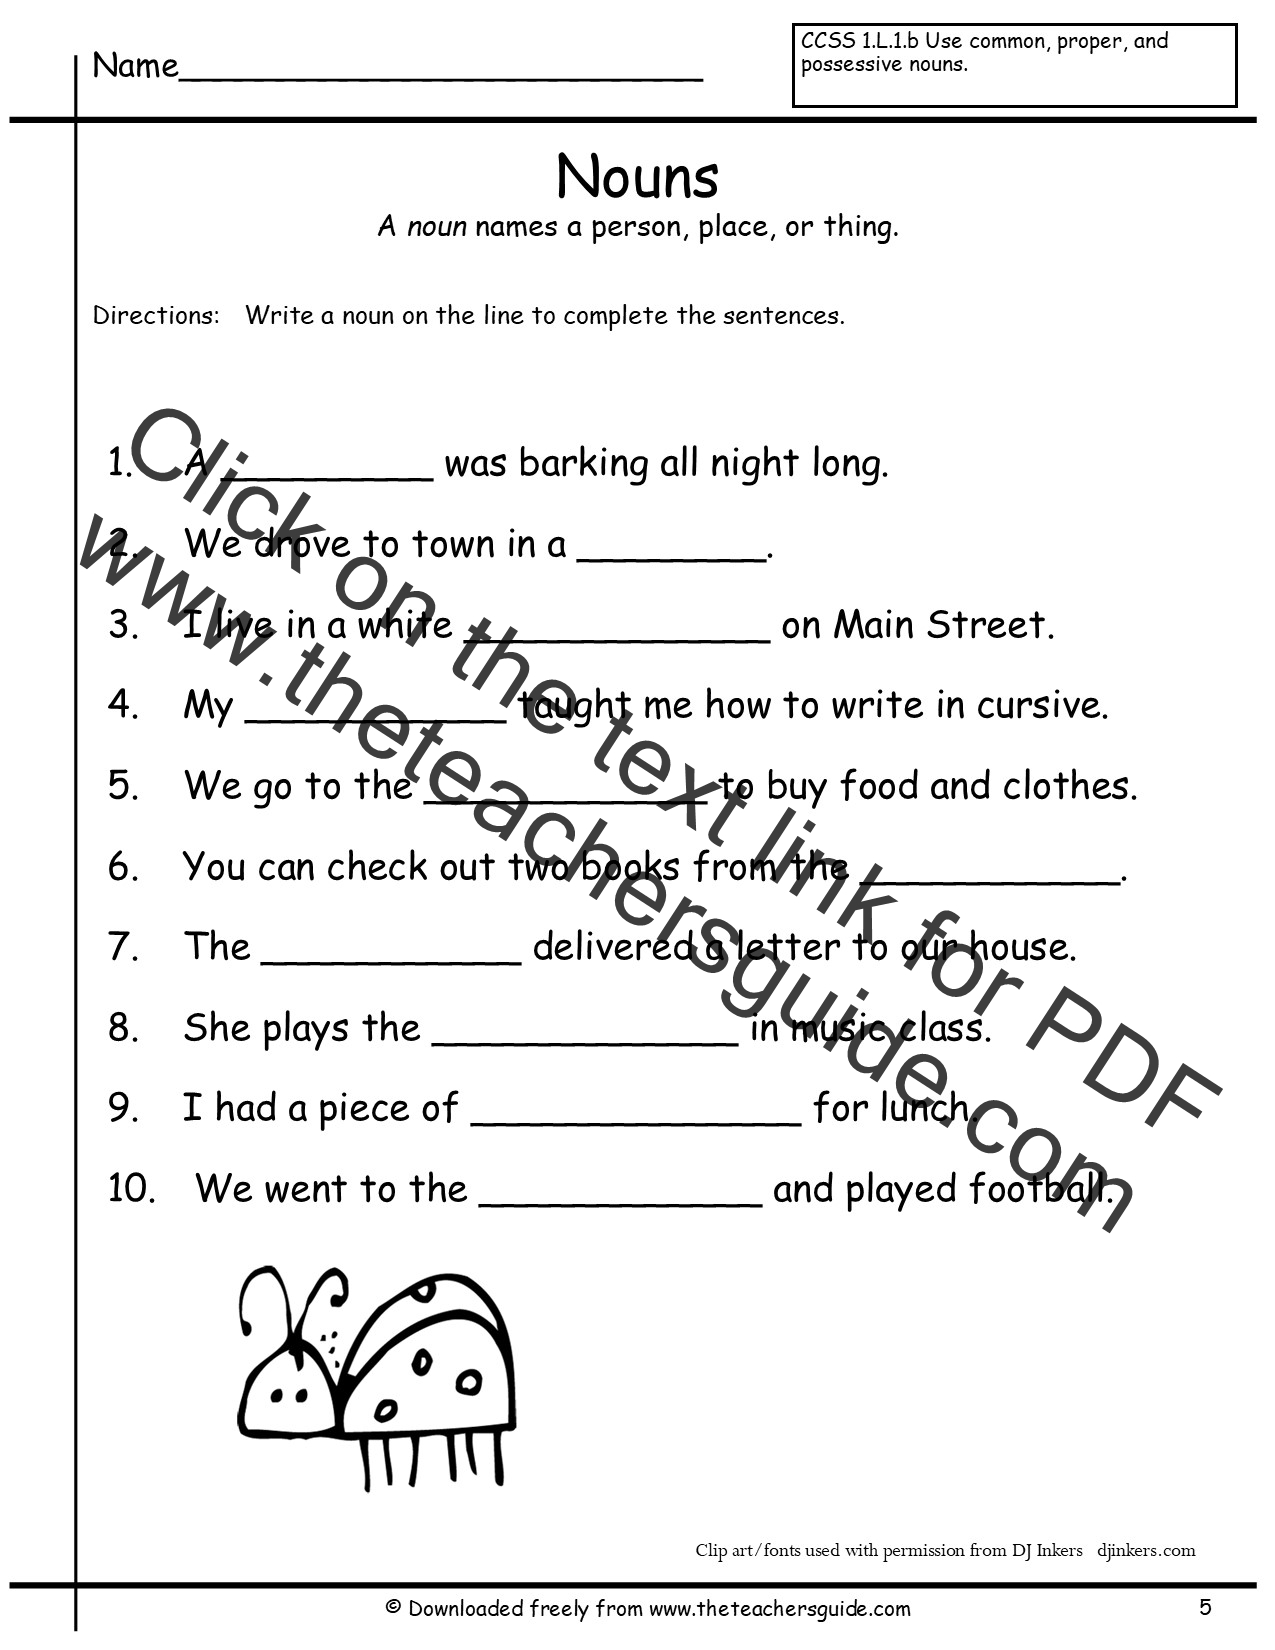 identifying-nouns-worksheet-1st-grade